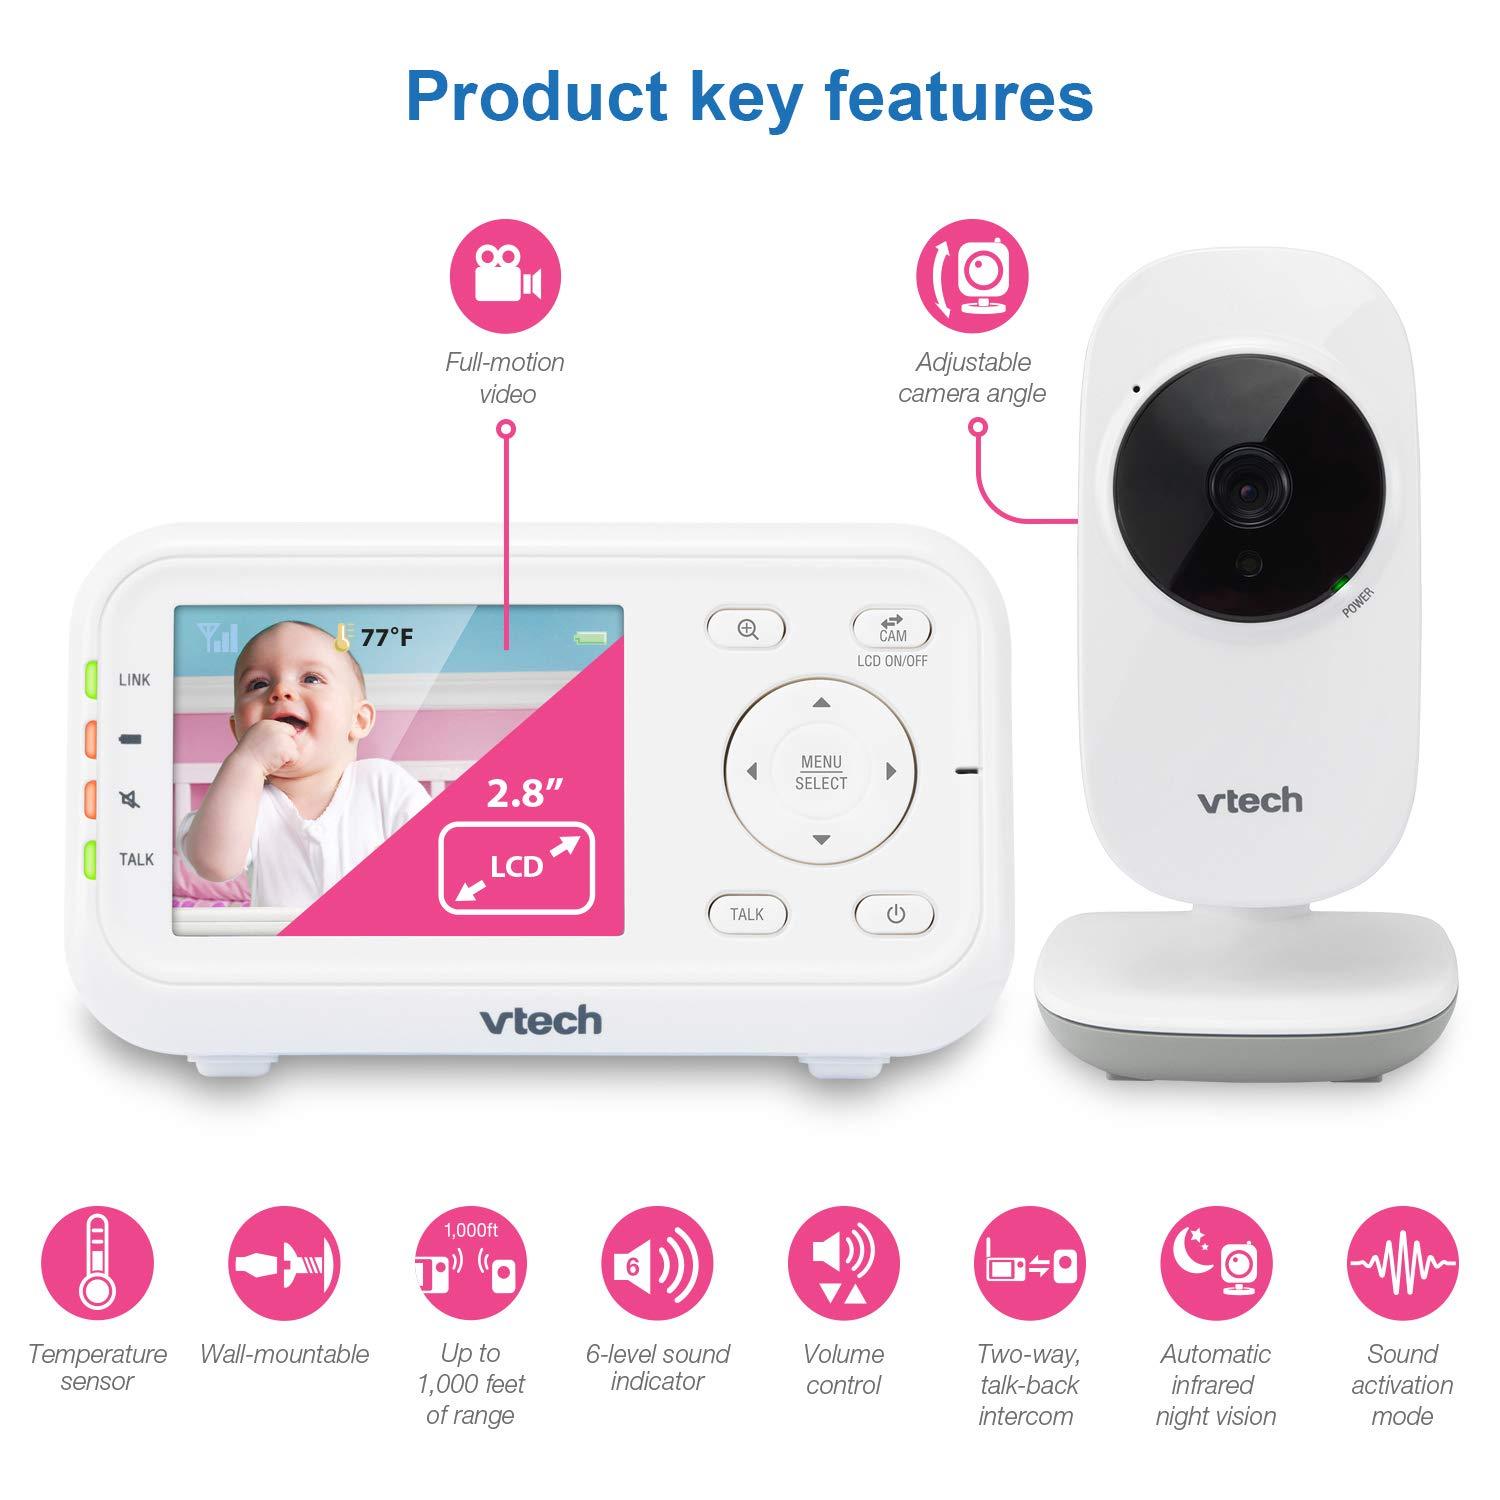 VTech Smart Video Baby Monitor